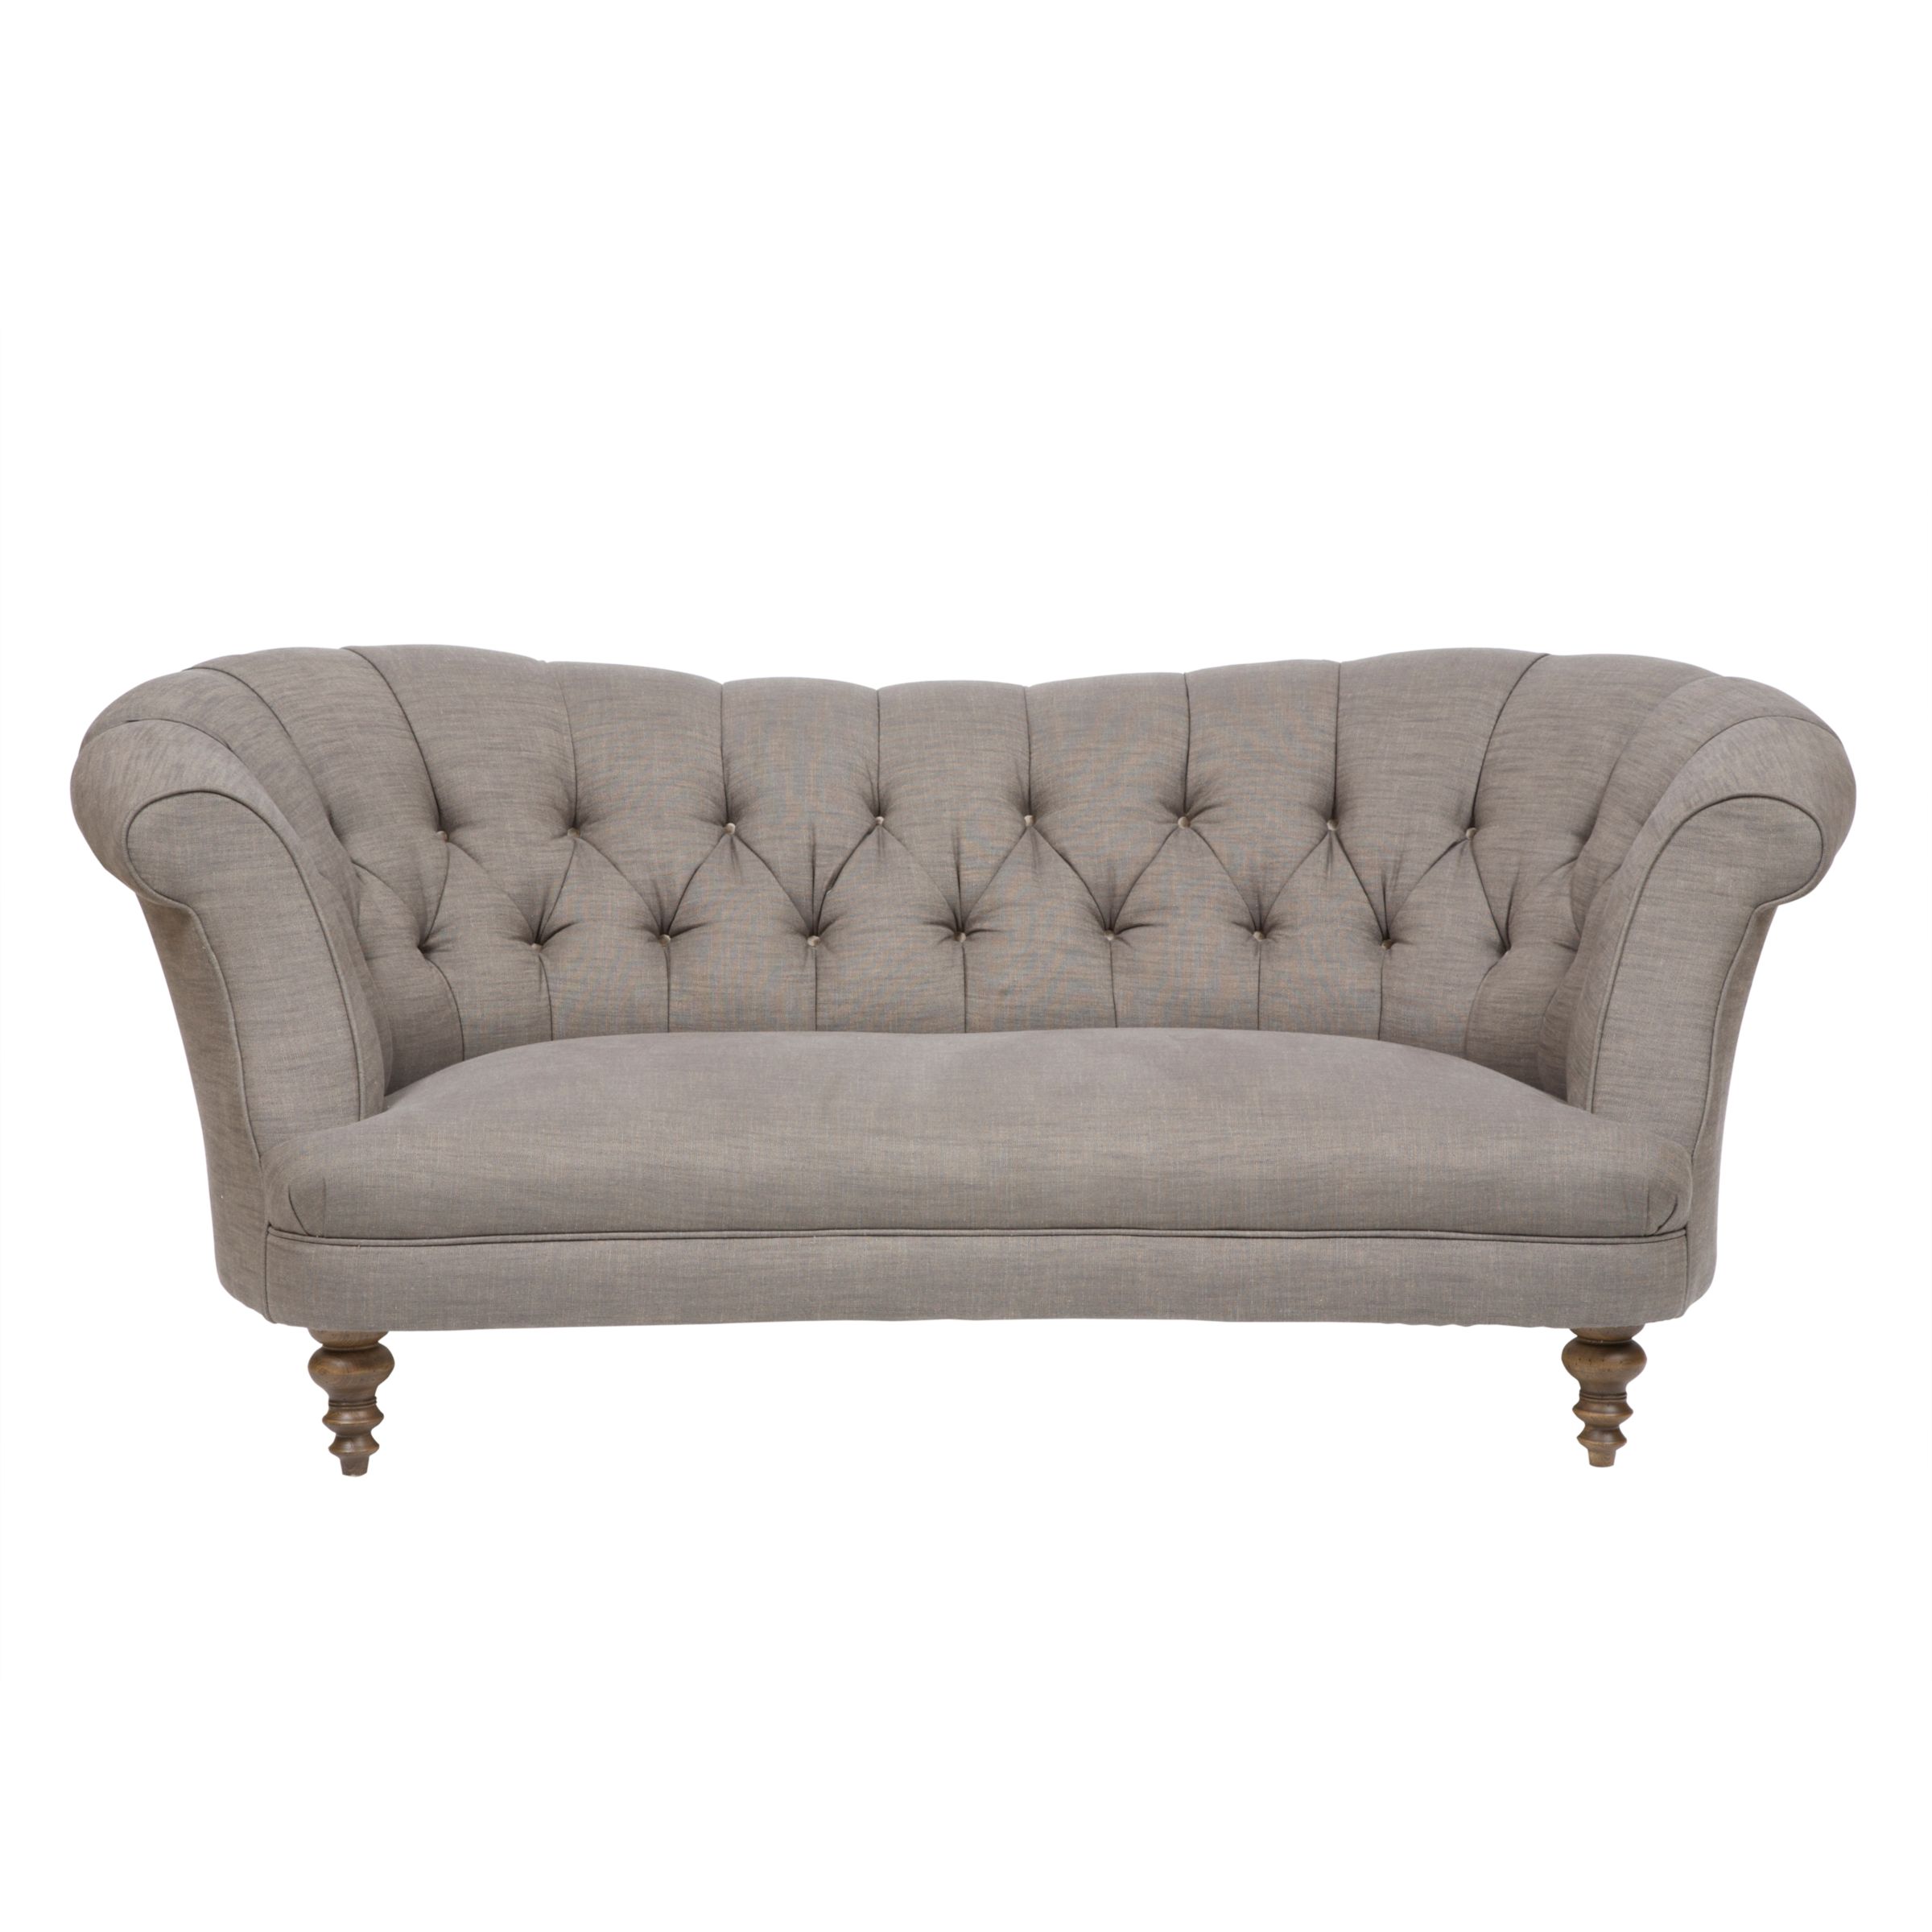 John Lewis Hayworth Large Sofa, Sorrento Mist